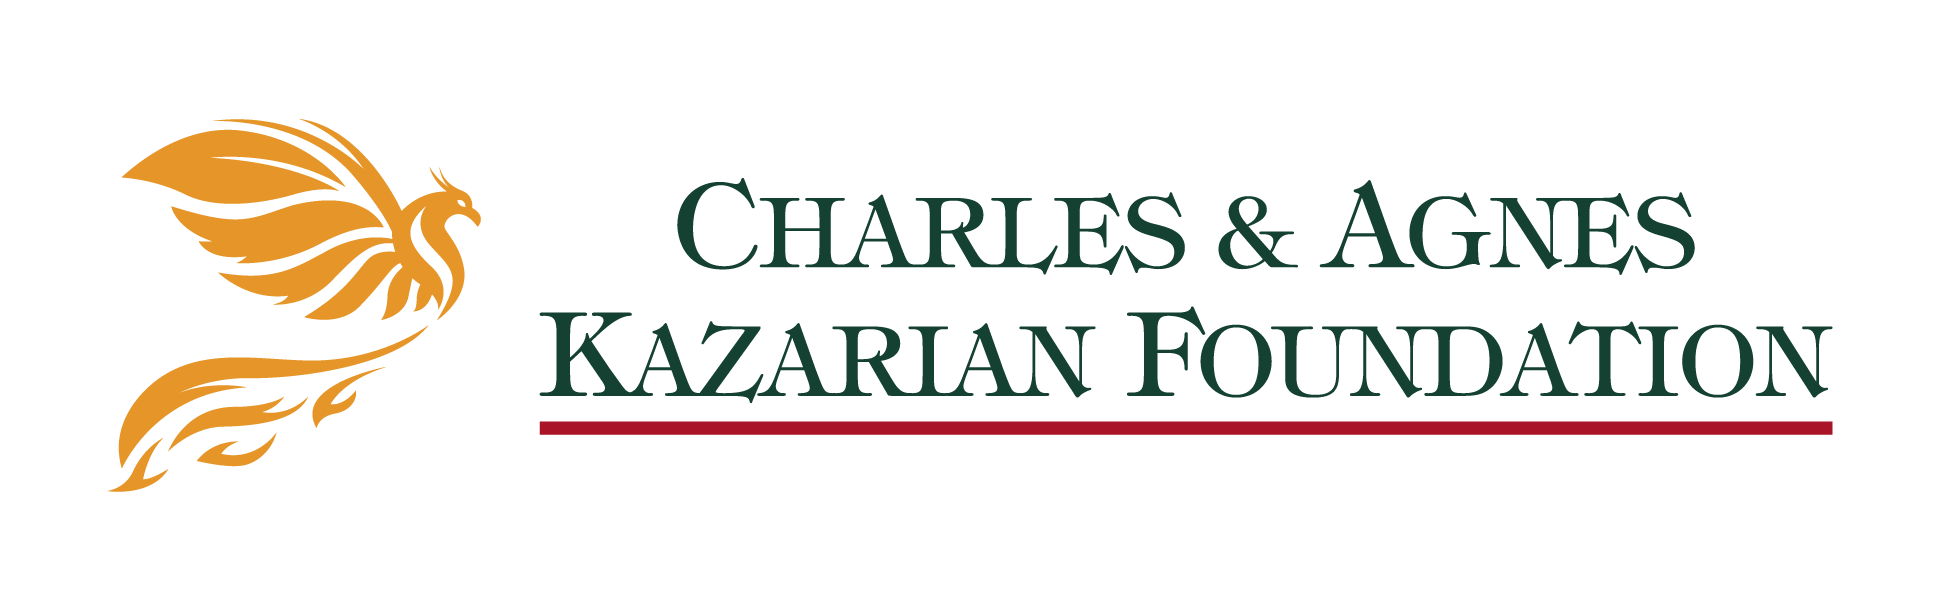 Charles & Agnes Kazarian Foundation logo